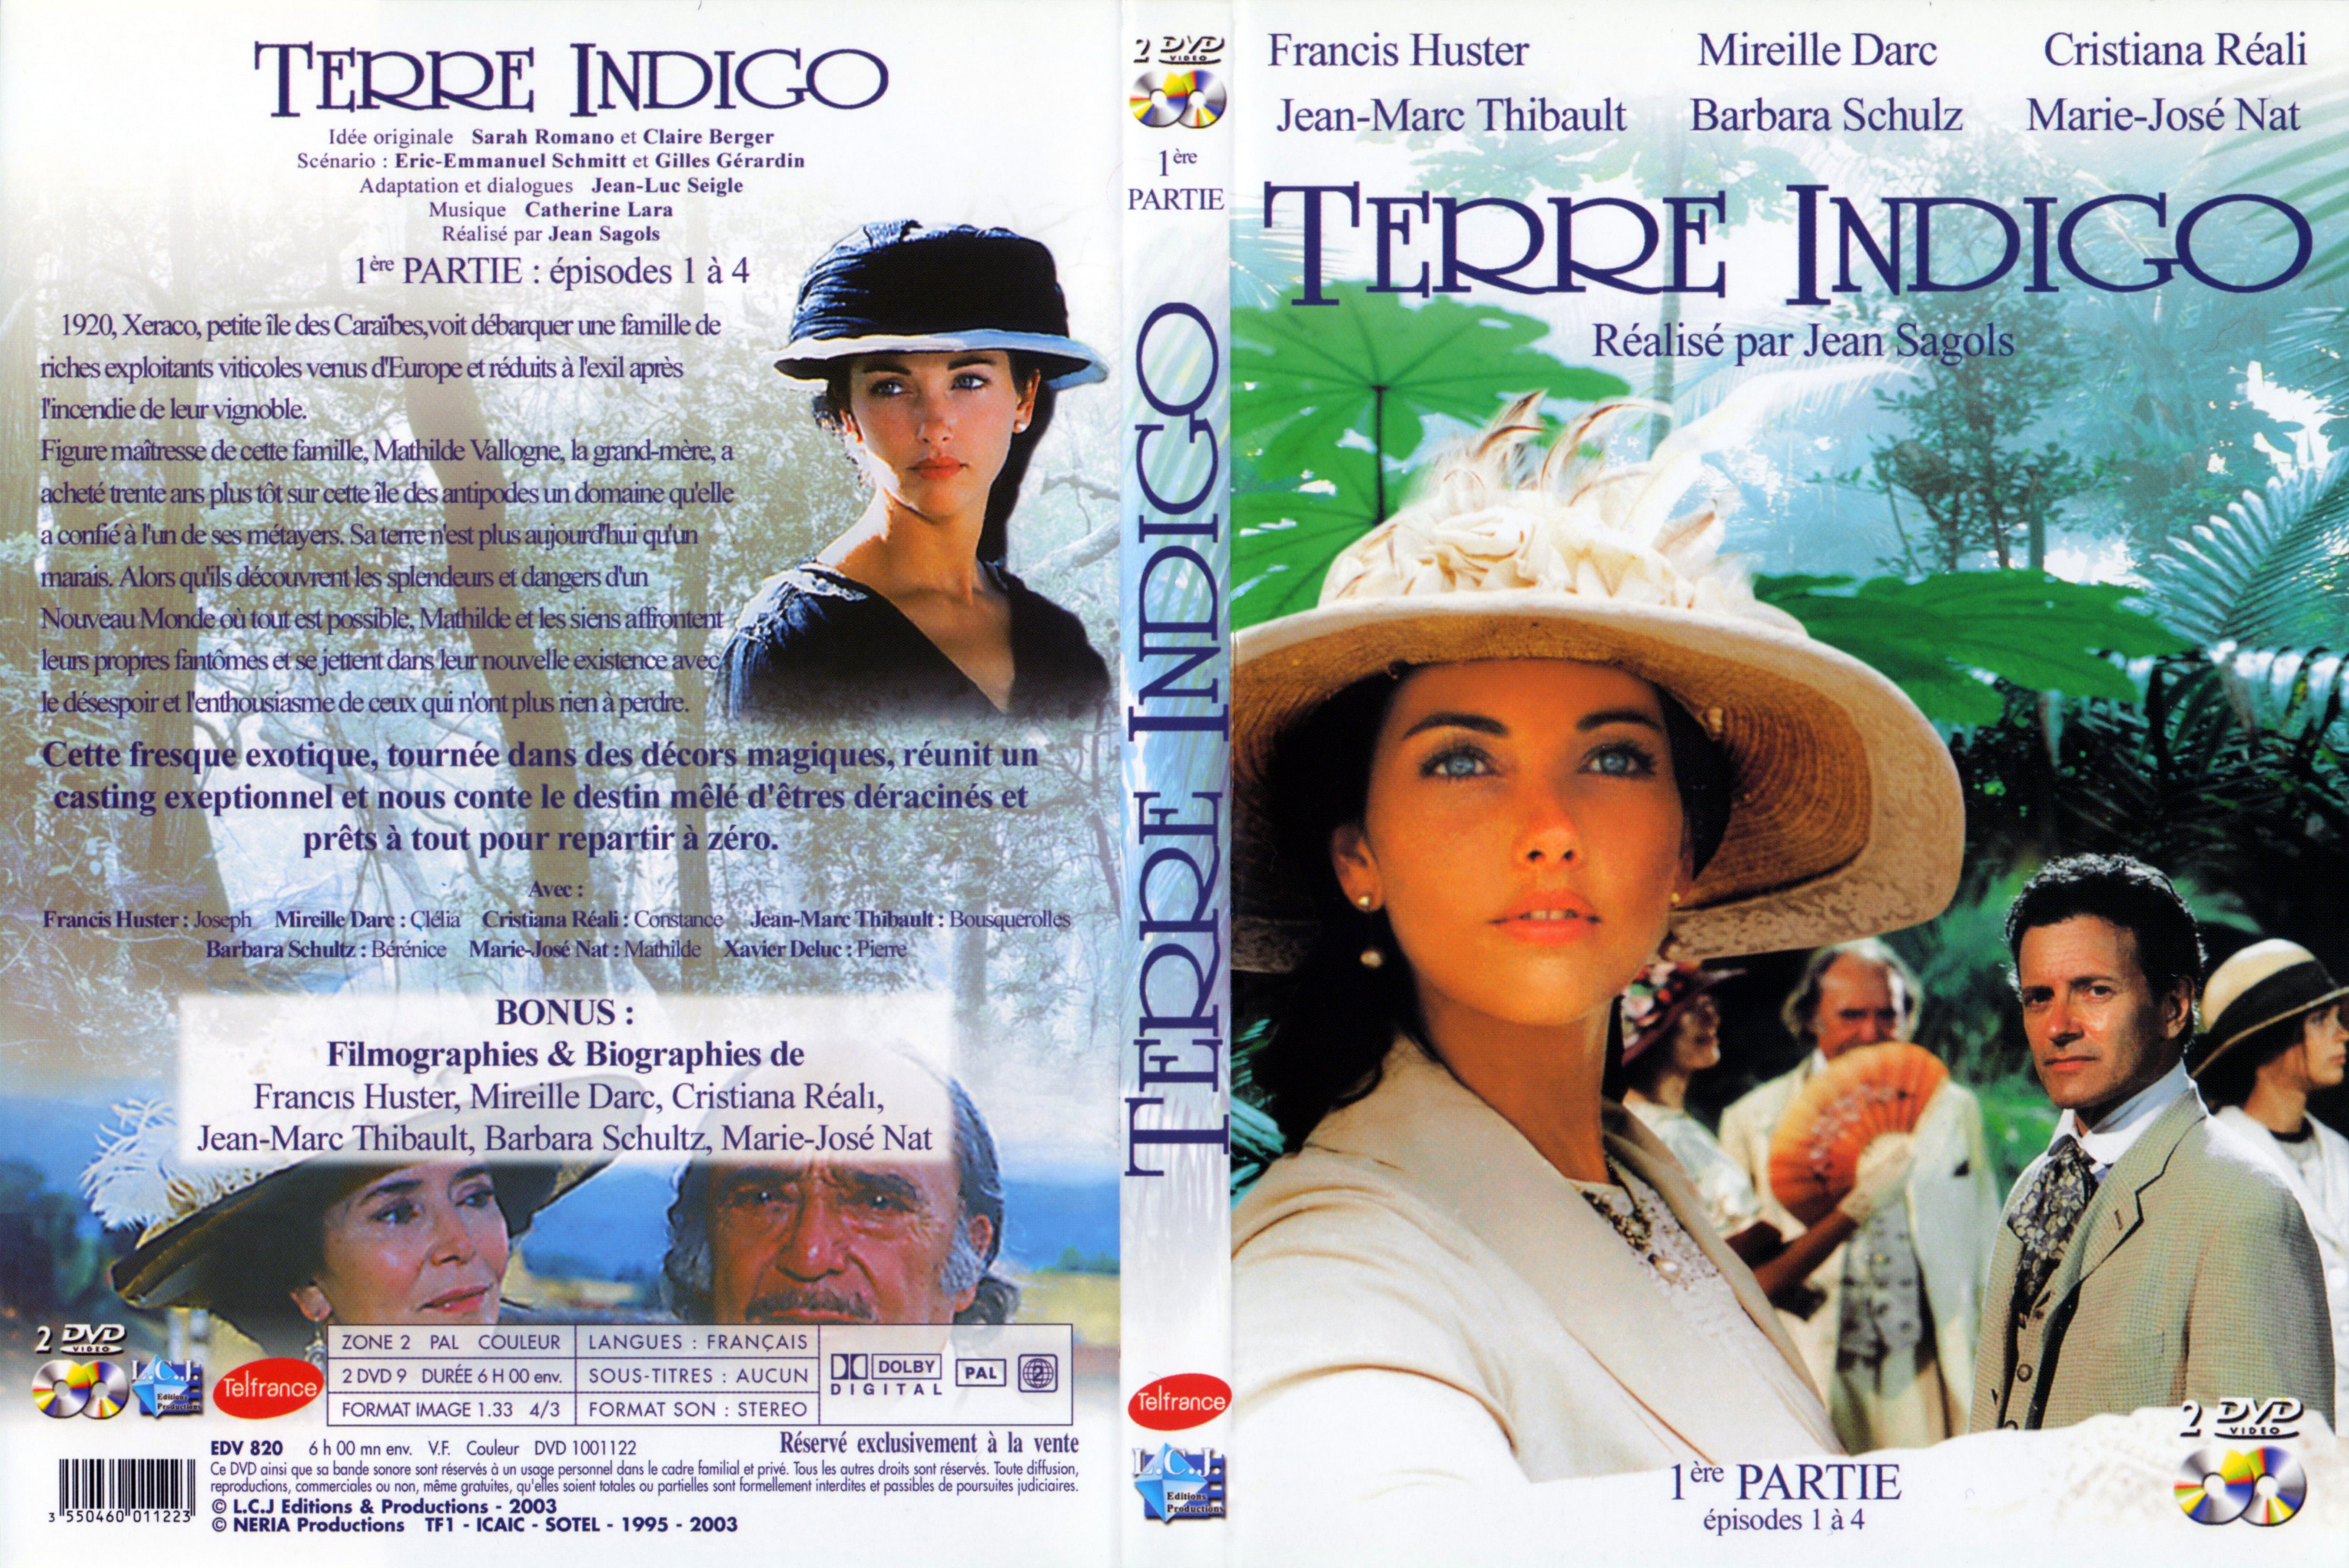 Jaquette DVD Terre indigo vol 1 v2